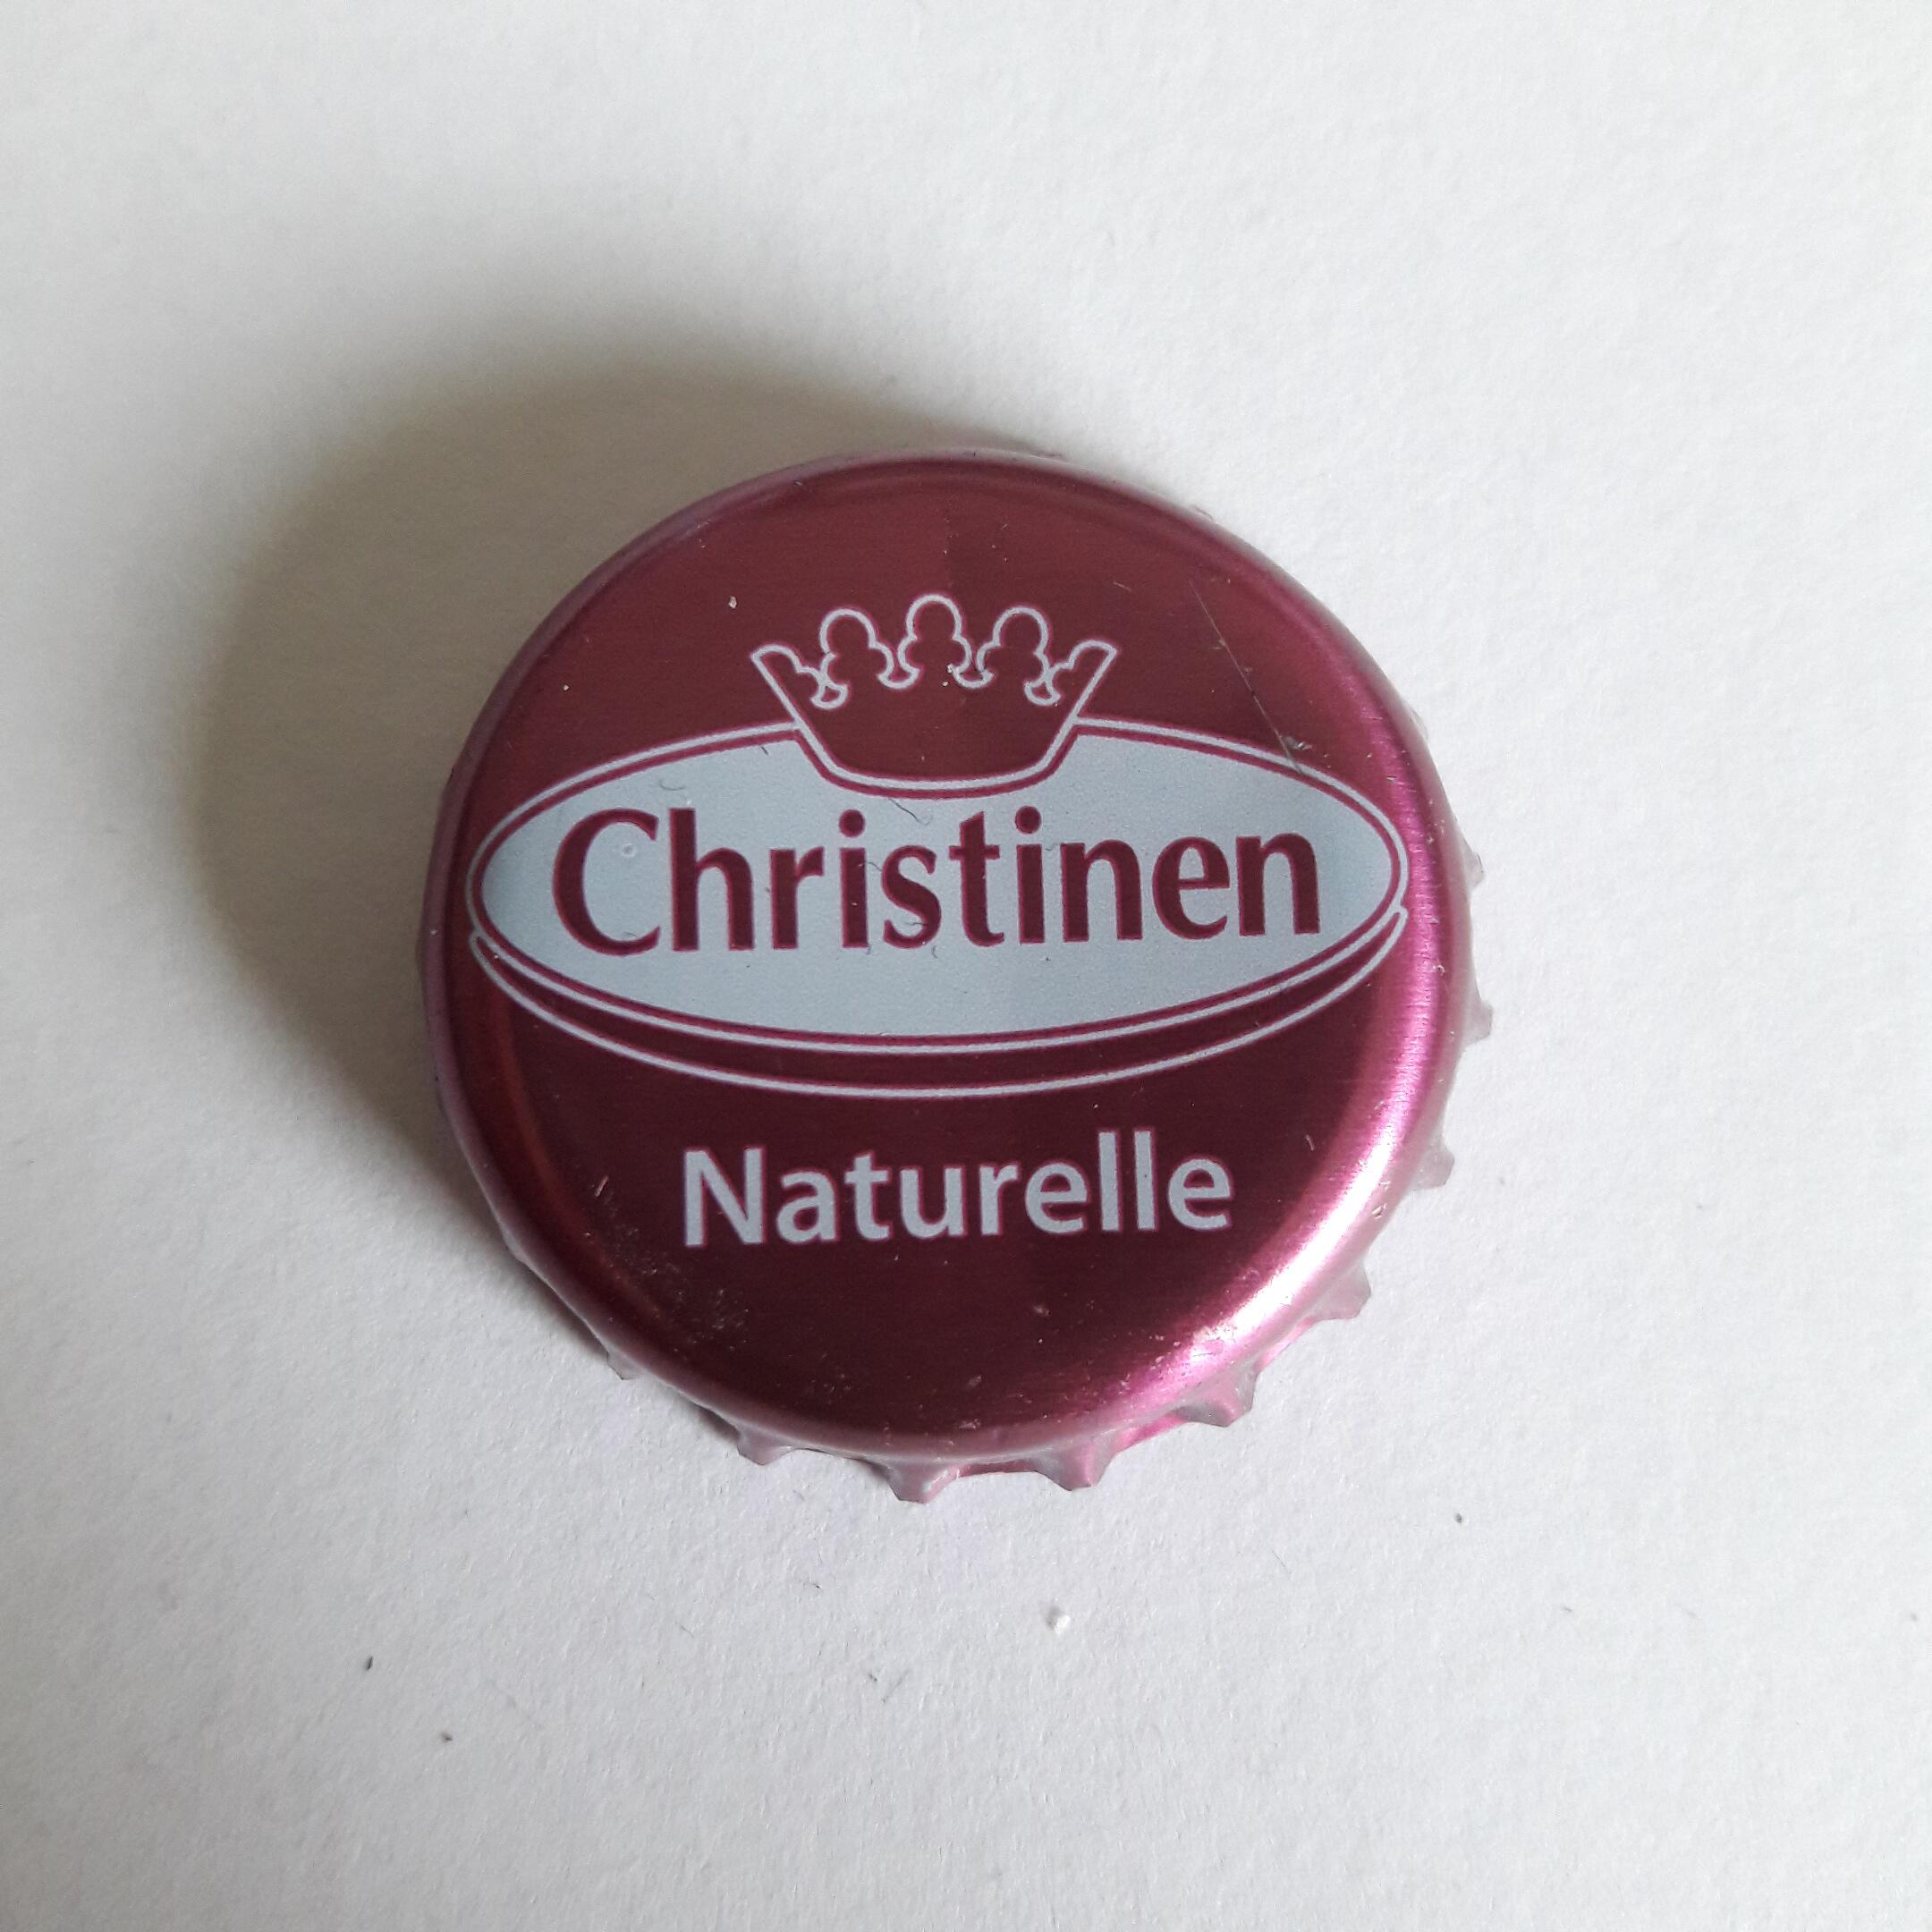 Christinen Naturelle